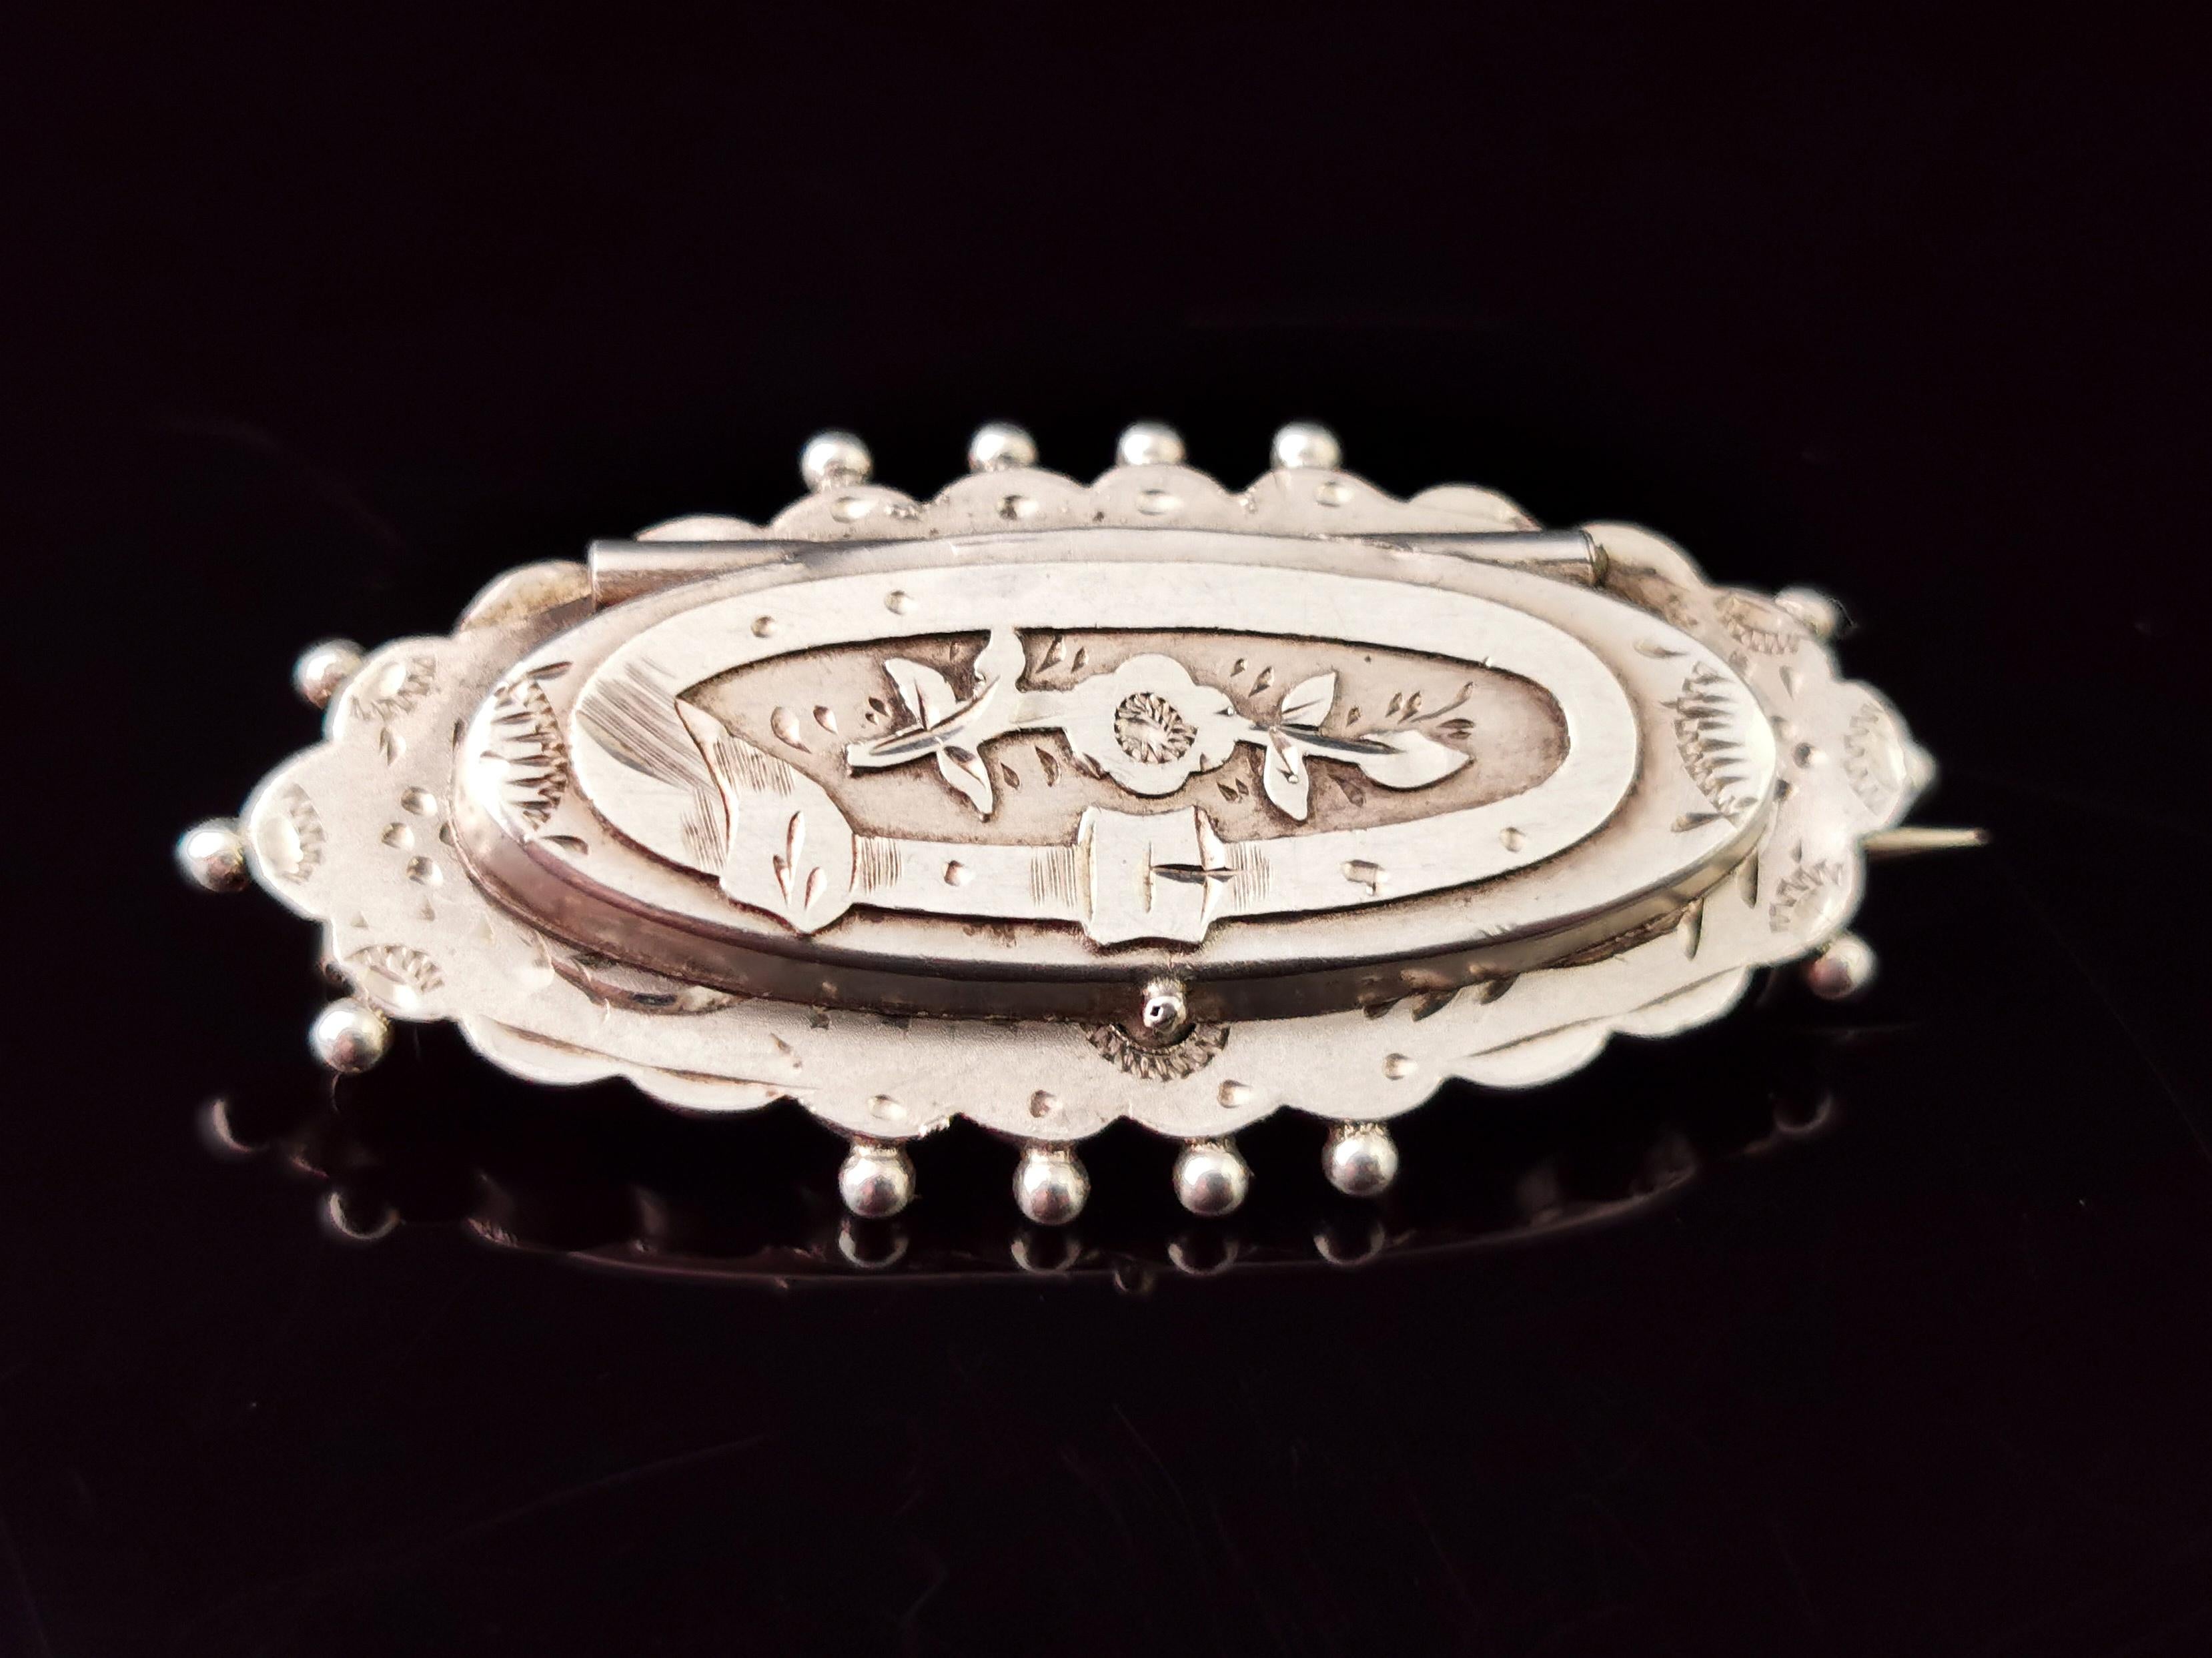 Aesthetic Movement Antique Silver Locket Brooch, Welsh, Hidden Message